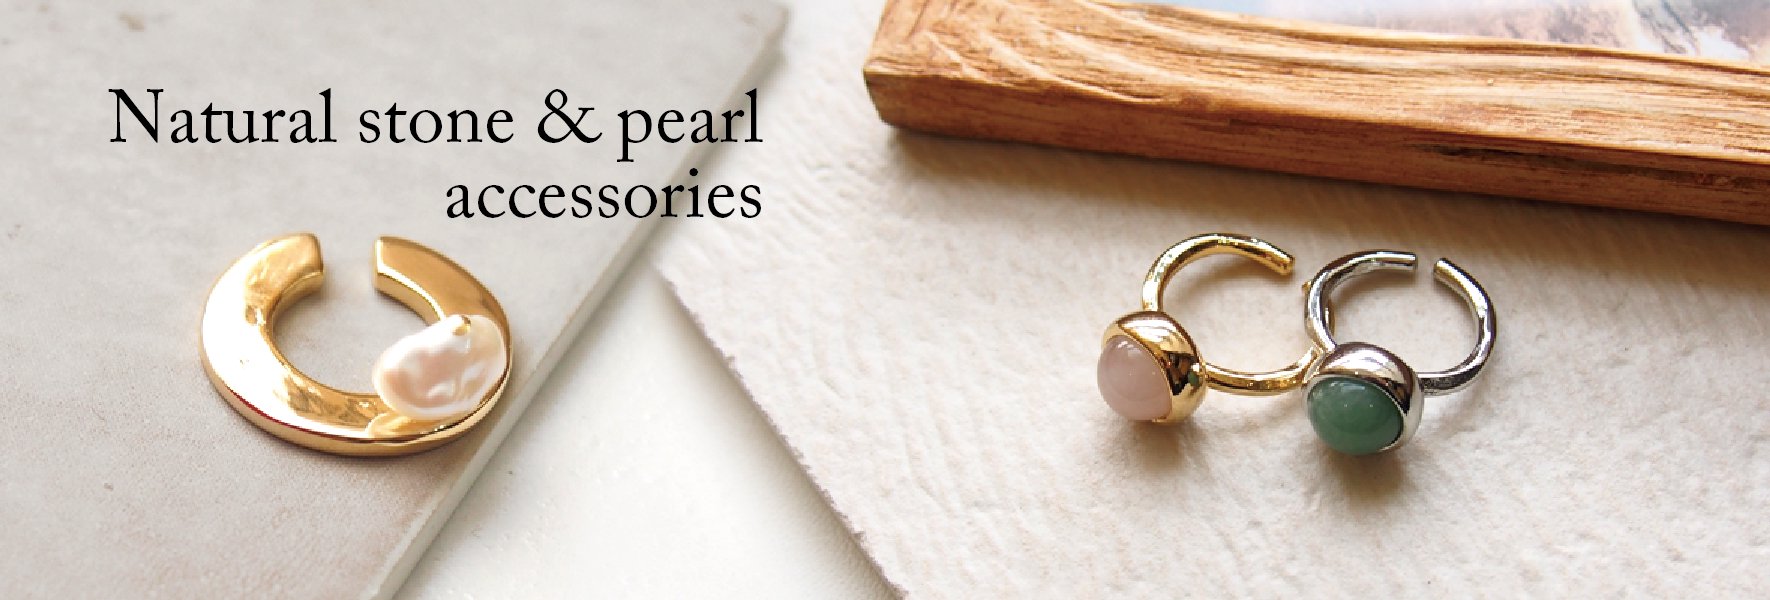 Natural stone & pearl accessories